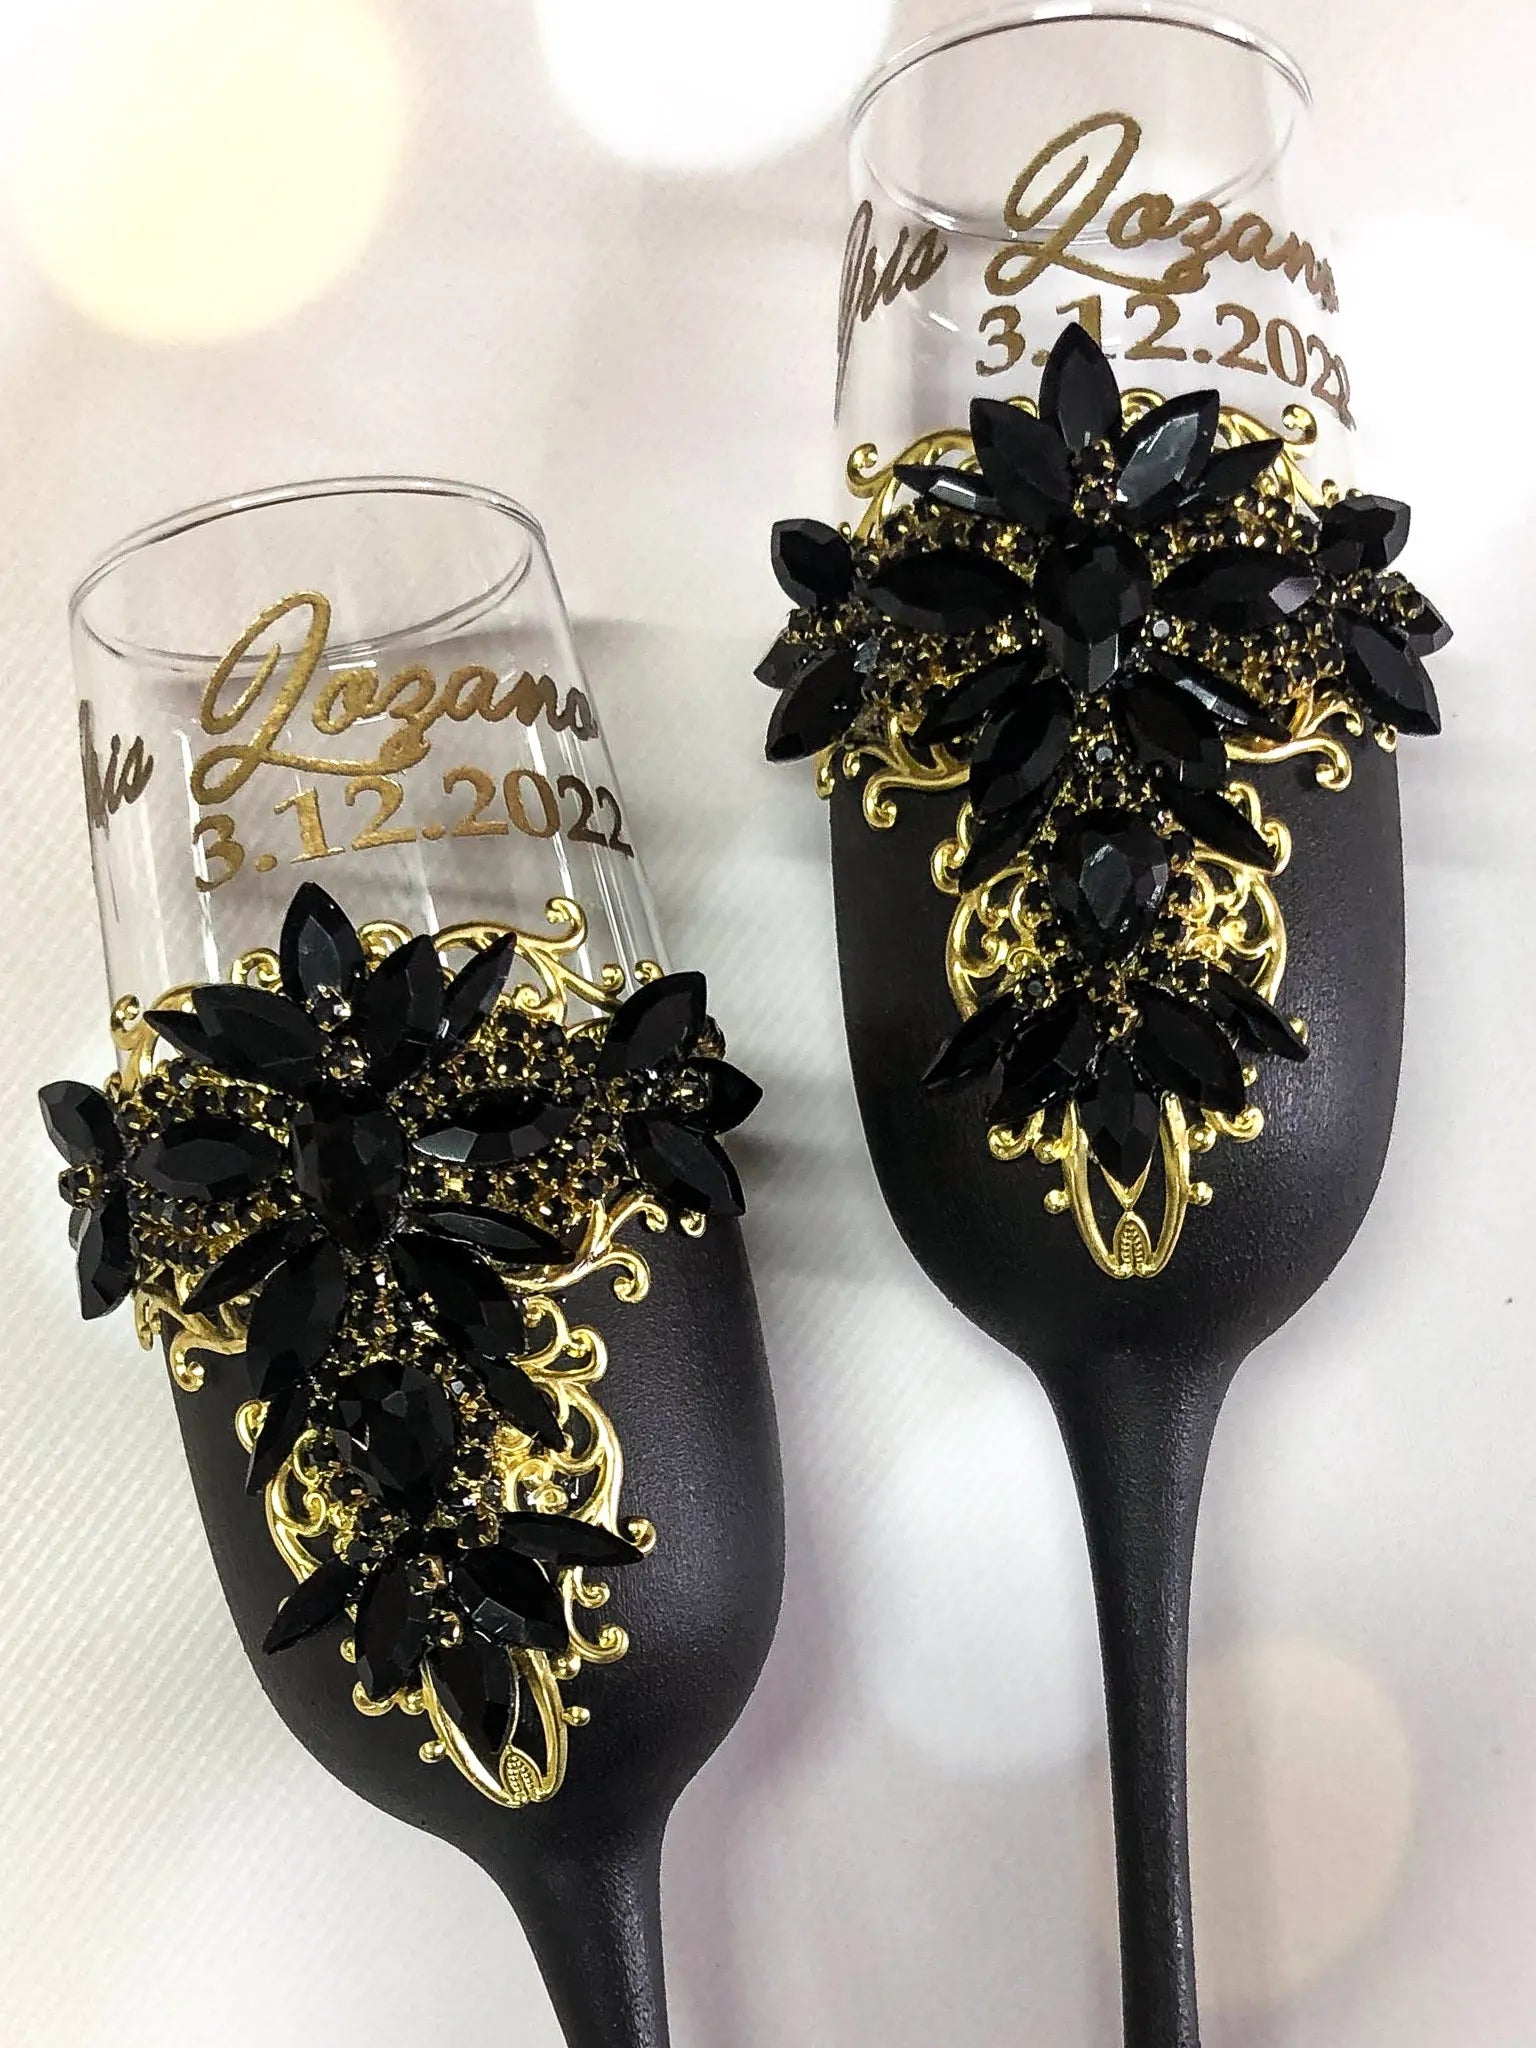 Customizable gothic wedding champagne glasses